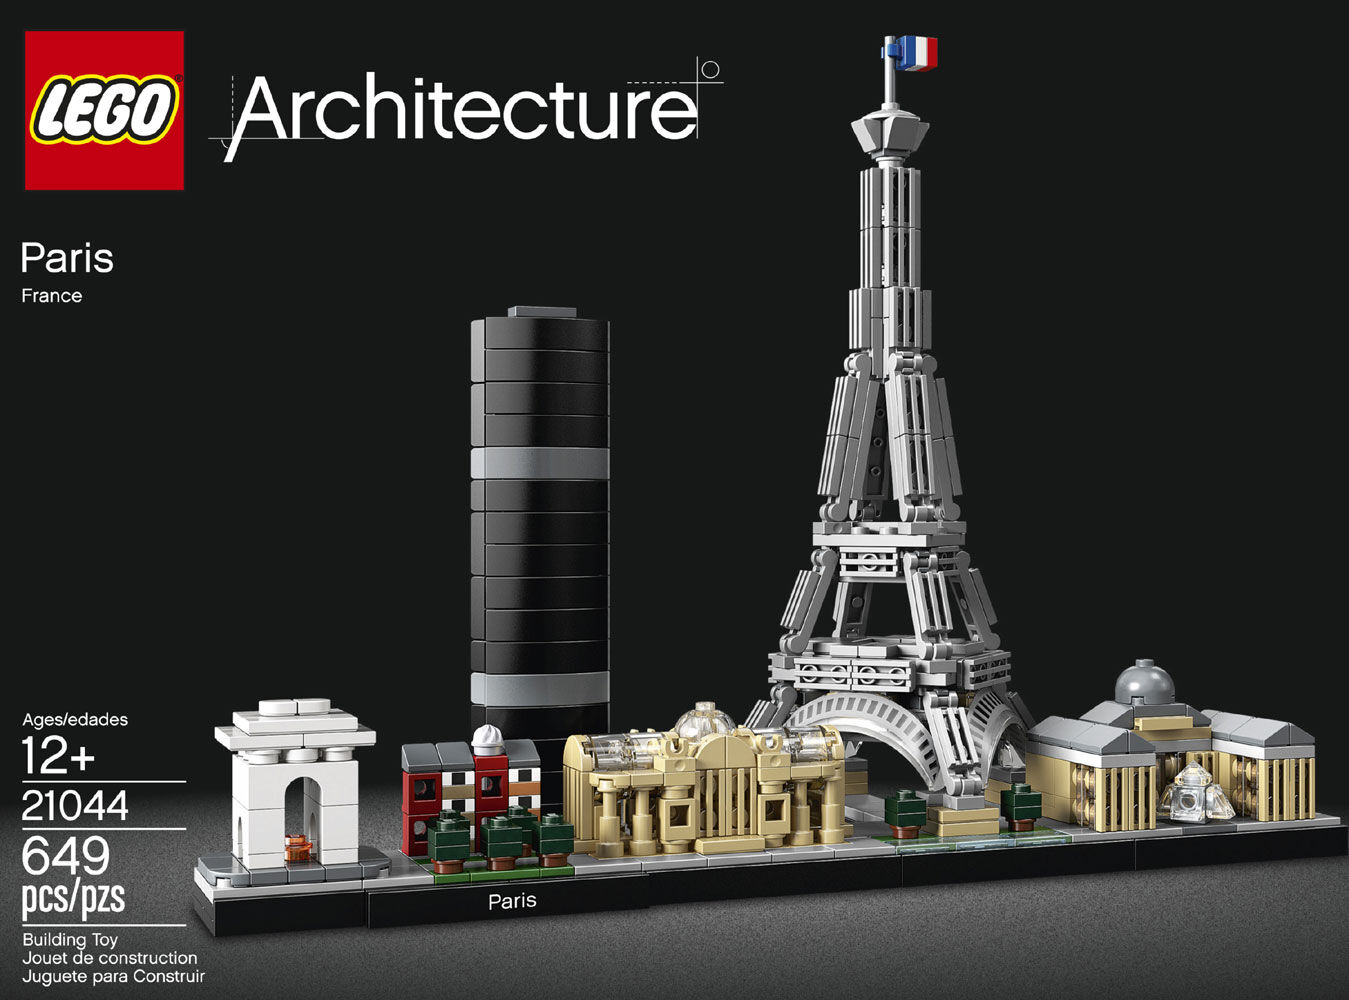 LEGO Architecture Paris 21044 (649 pieces) | Toys R Us Canada